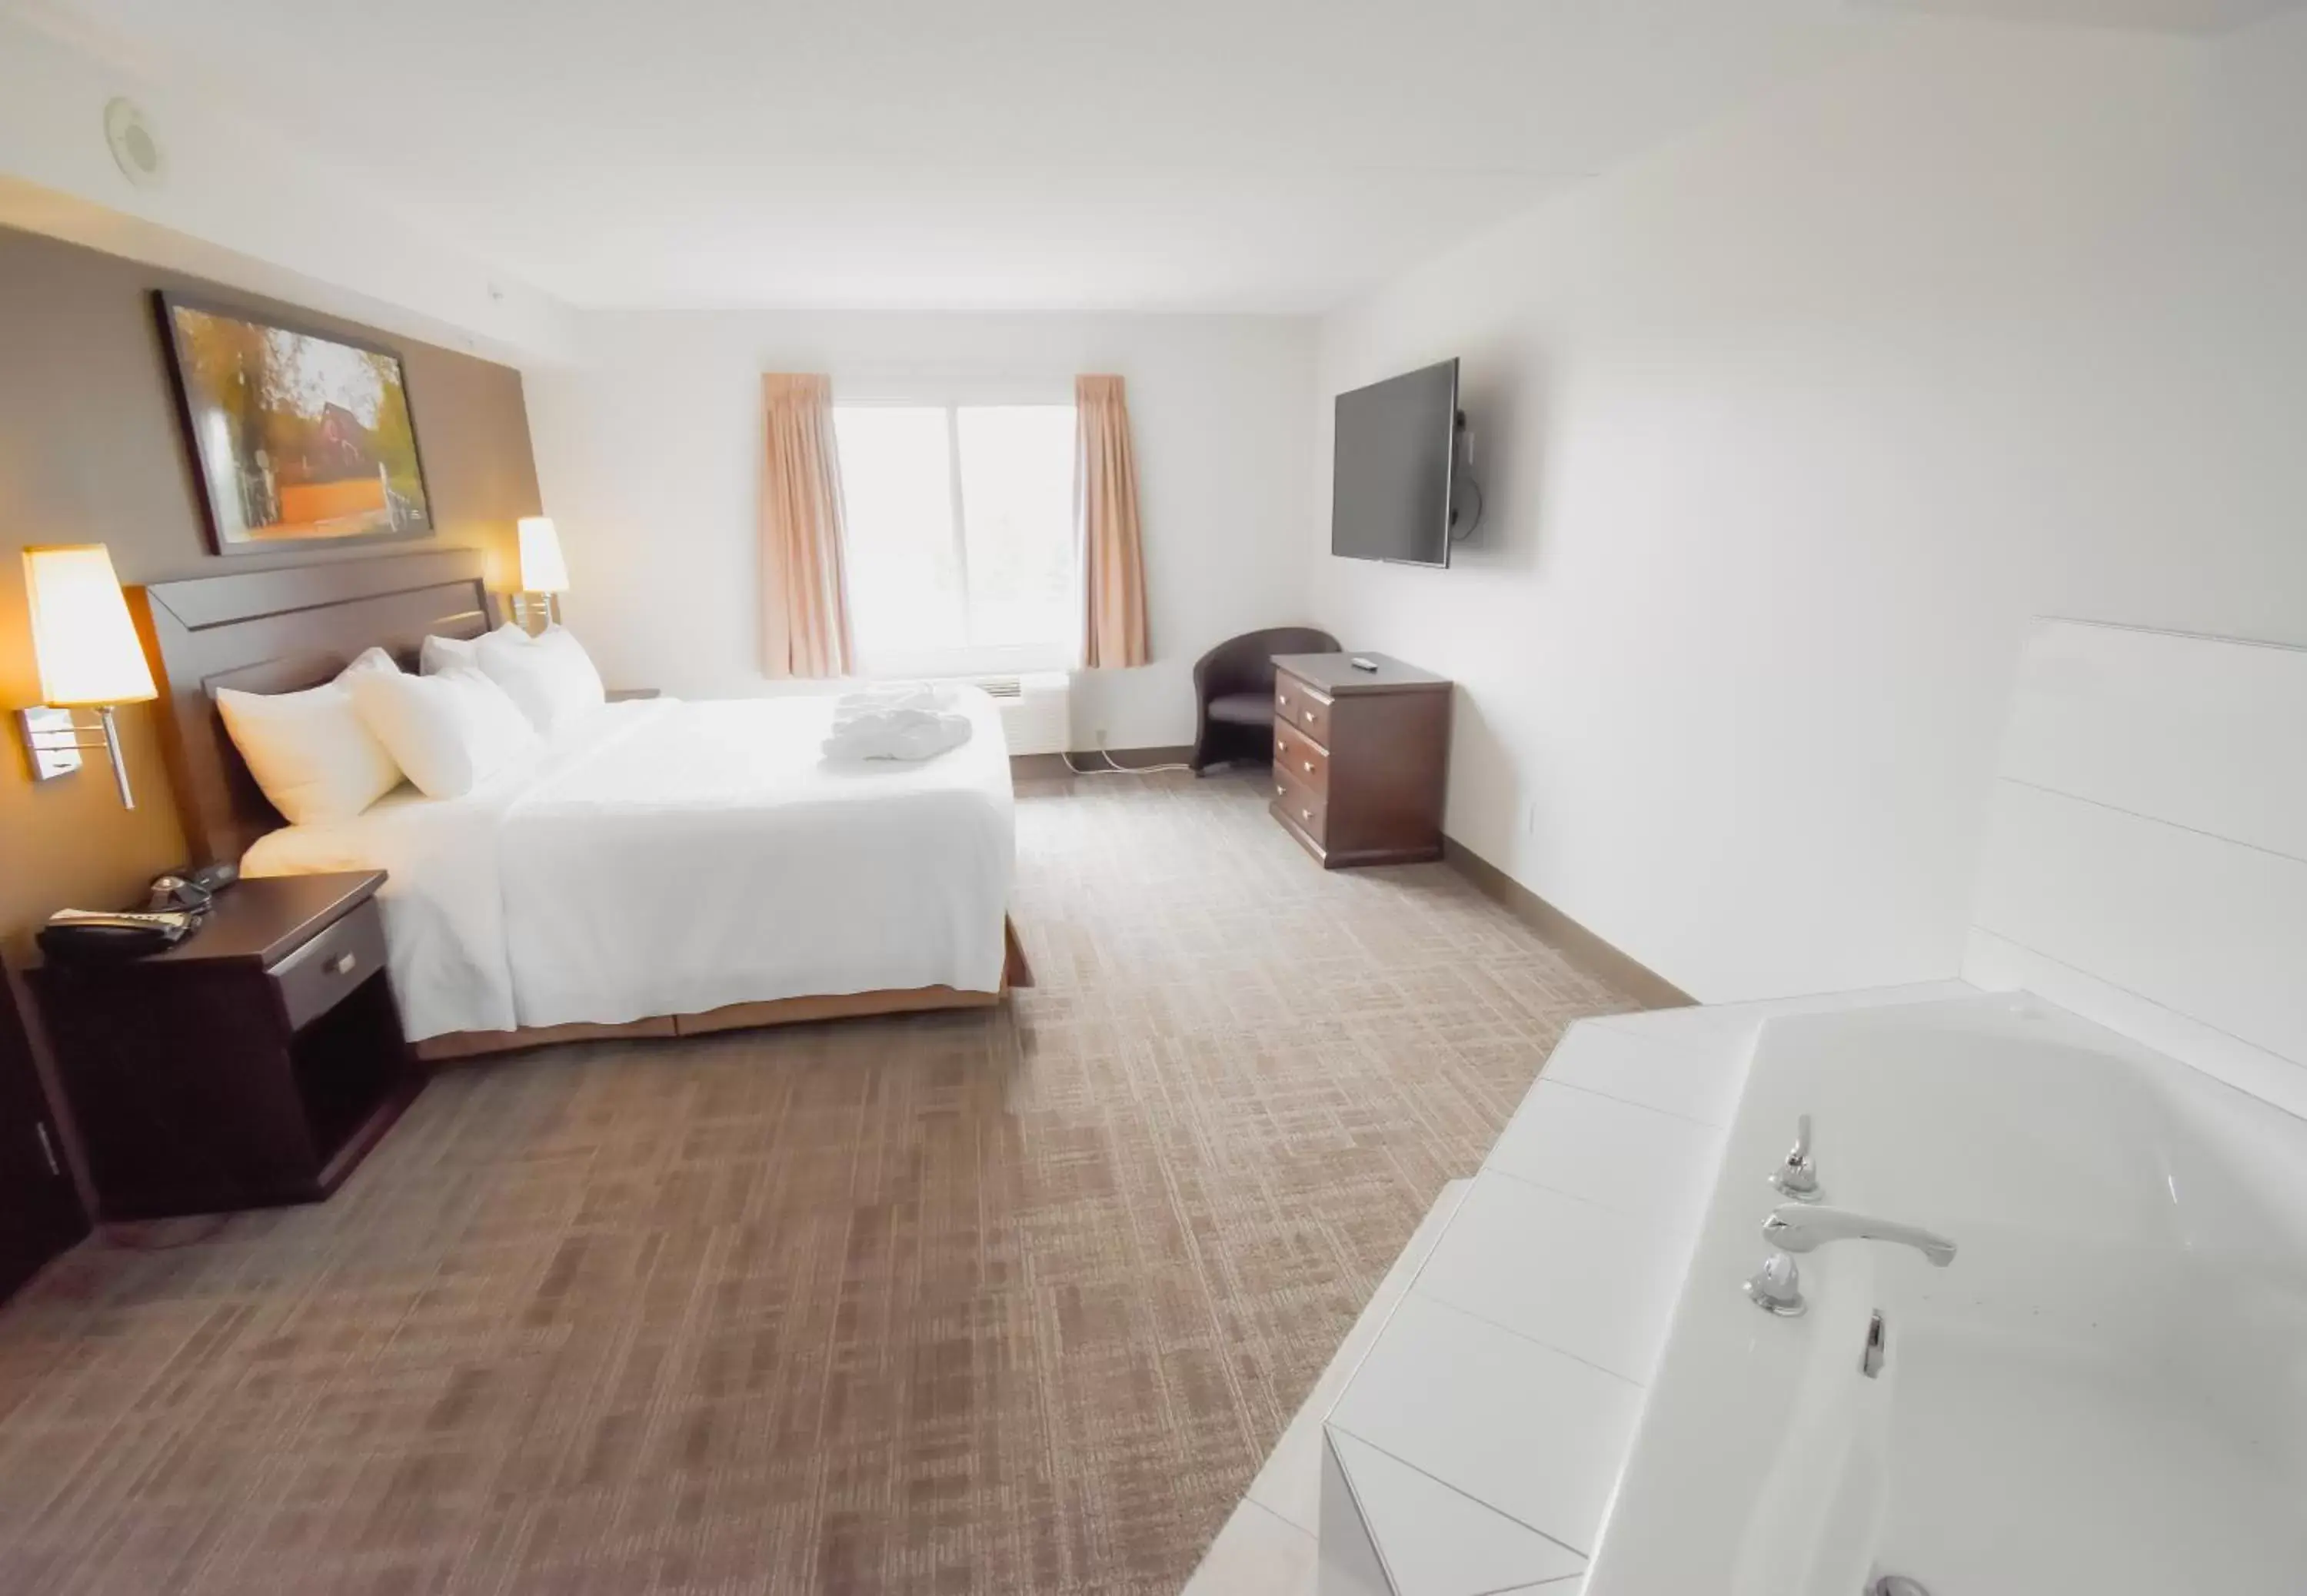 Bedroom in Canad Inns Destination Centre Club Regent Casino Hotel